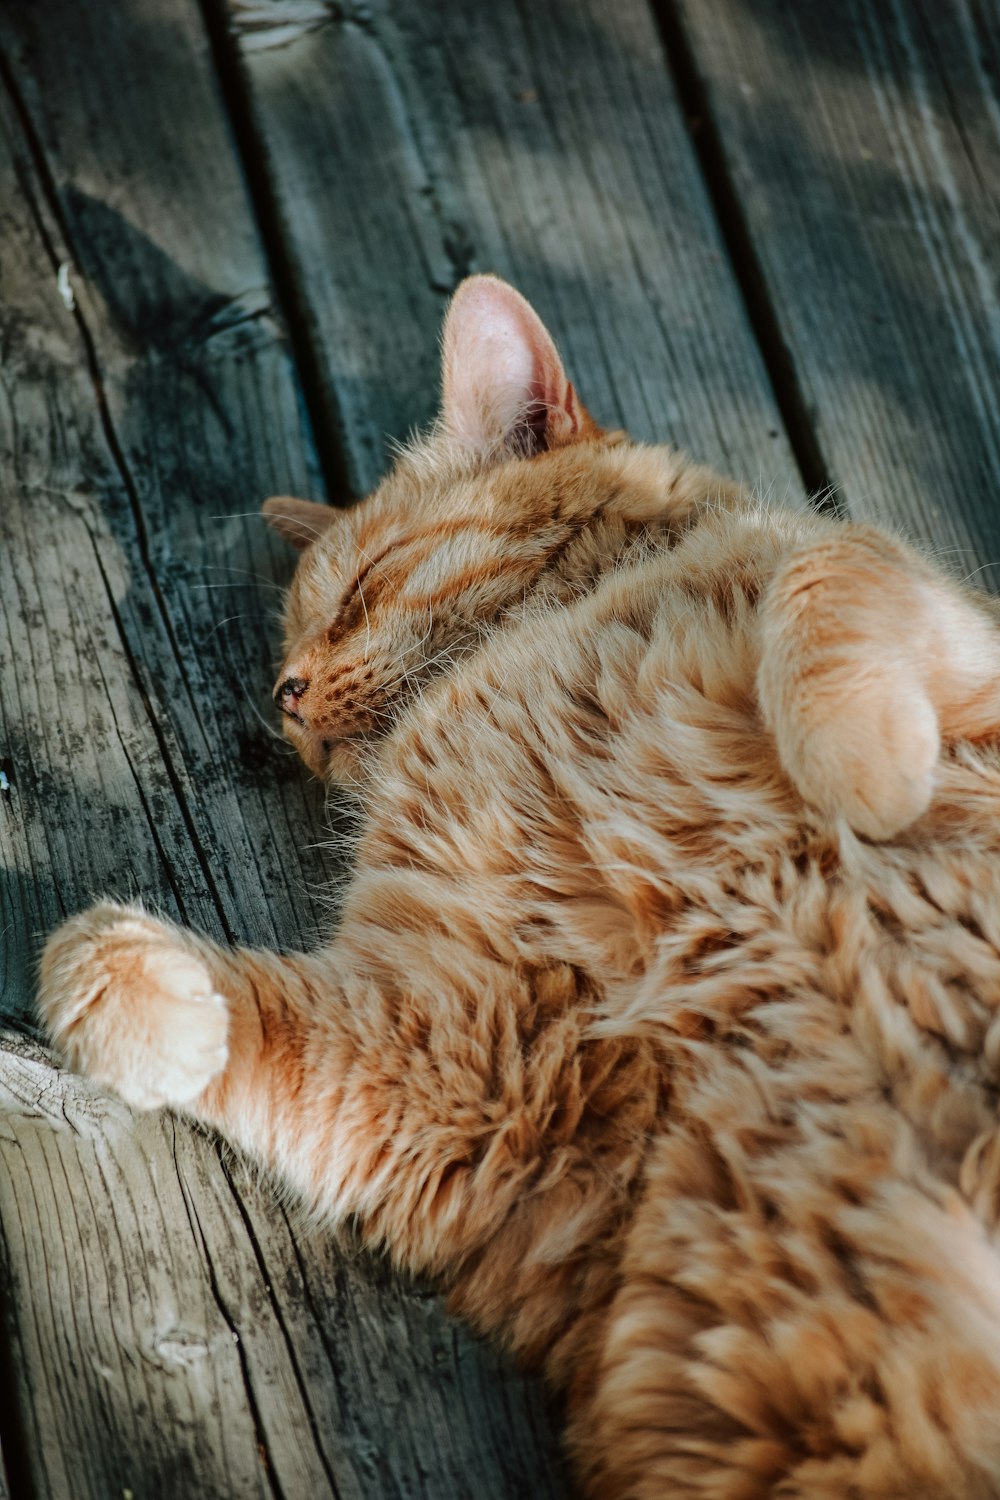 medium-coated orange cat sleeping on brown wood plank